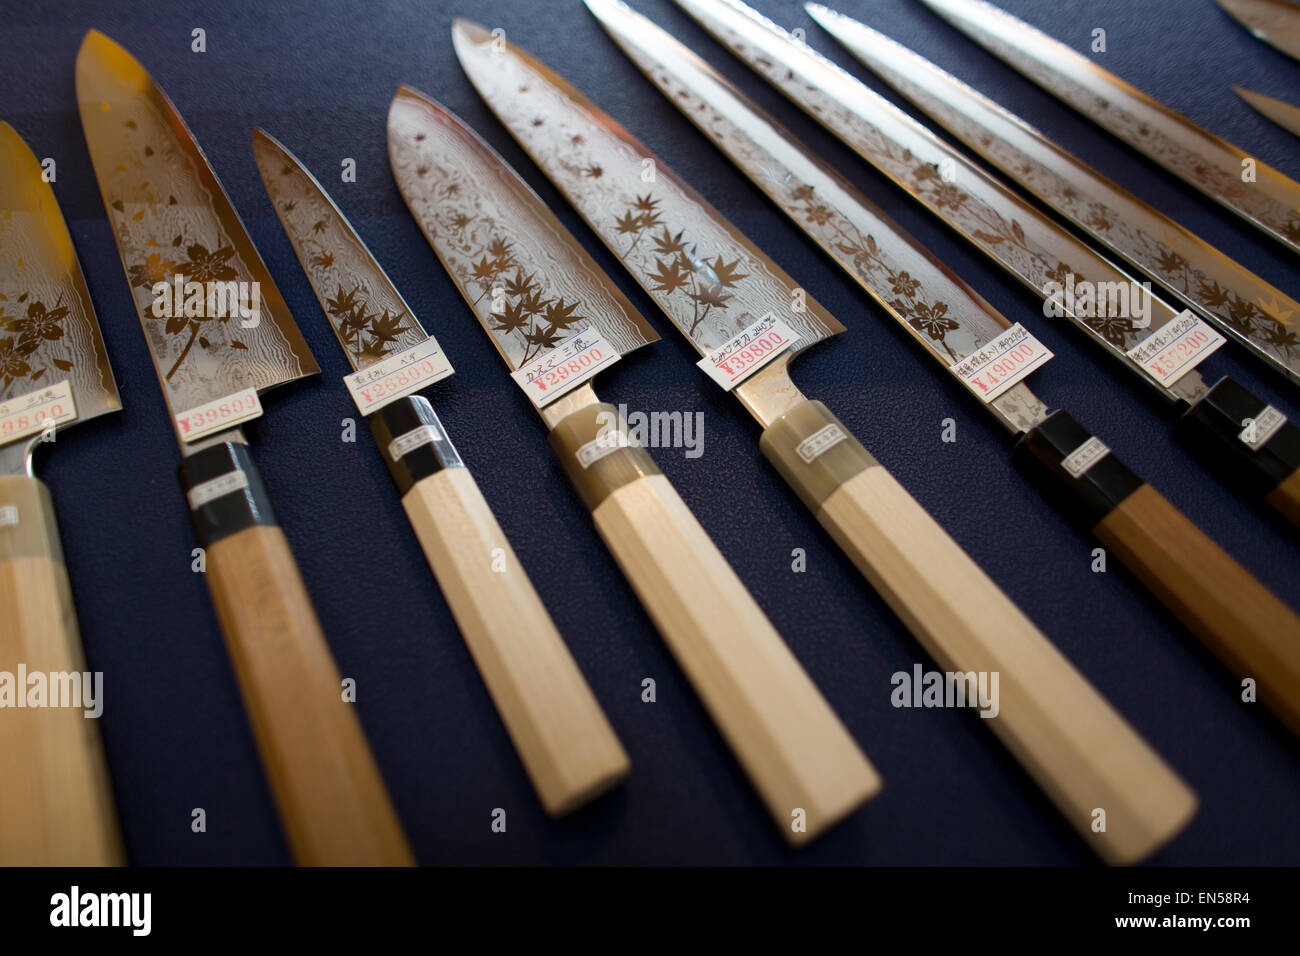 https://c8.alamy.com/comp/EN58R4/sushi-knives-shop-in-tokyo-EN58R4.jpg